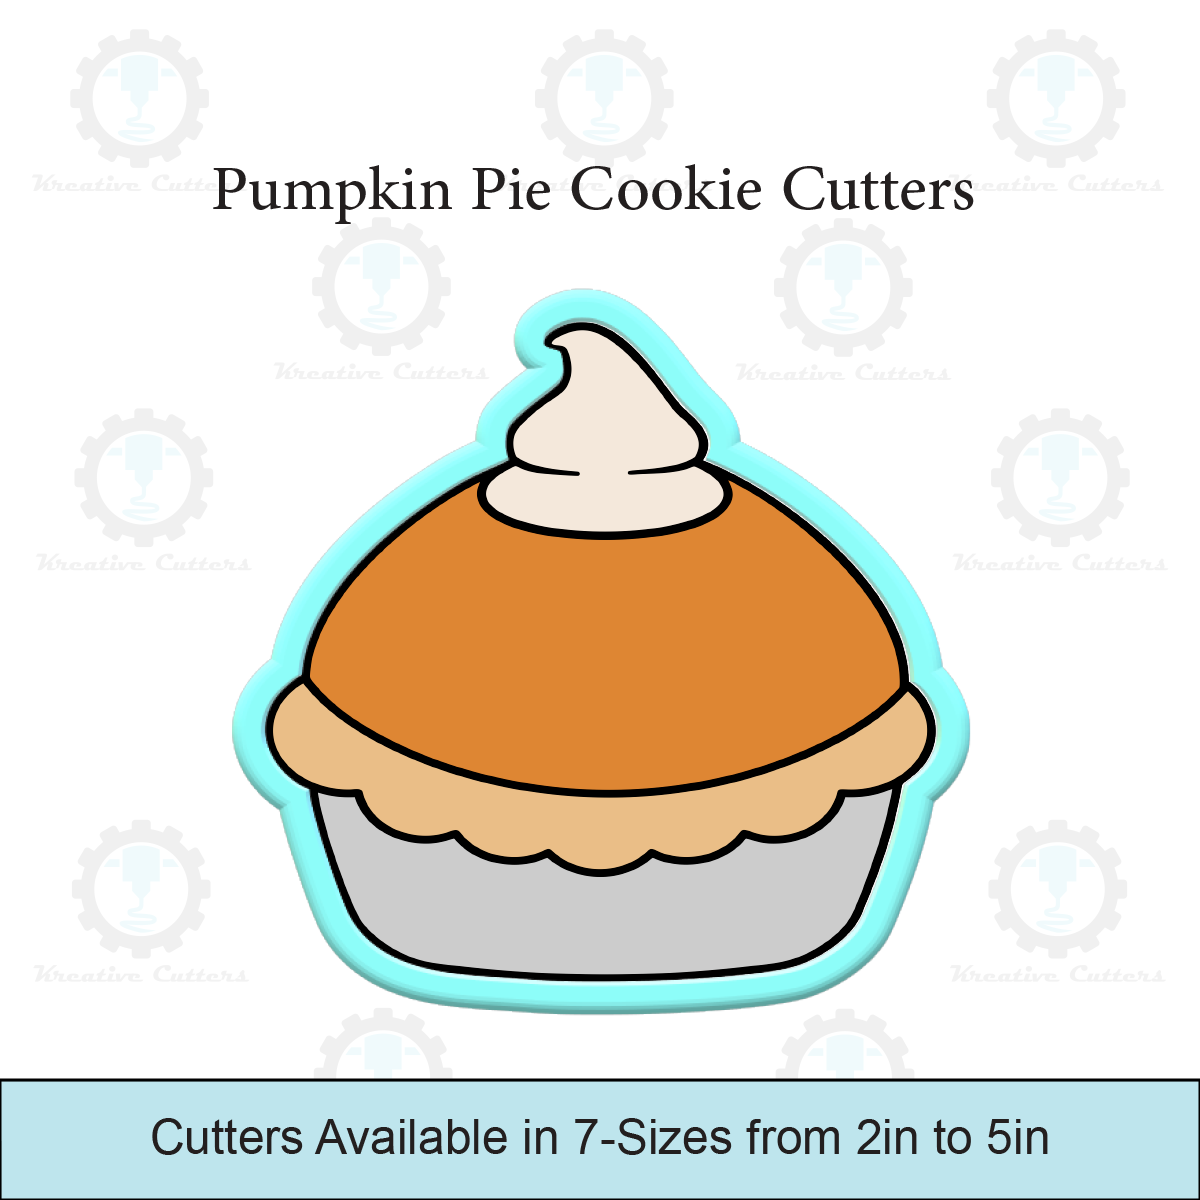 Pumpkin Pie Cookie Cutters